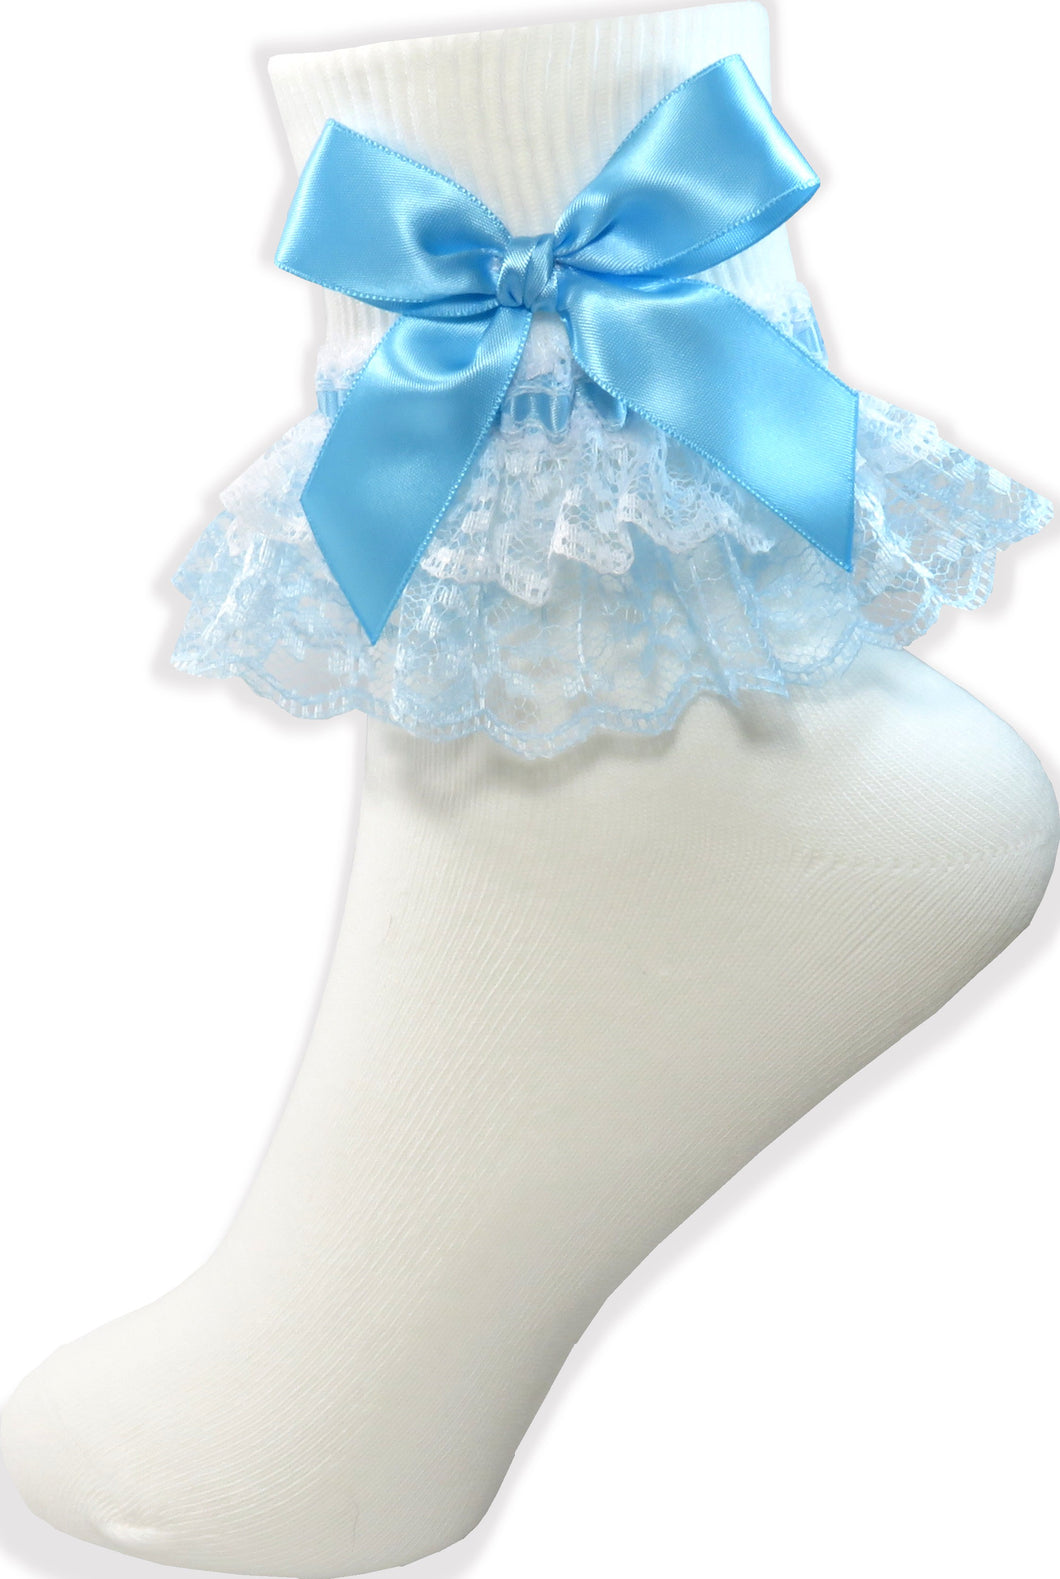 Blue Ribbon Bows White Lacy Socks for Adult Sissy Little Girl Leanne's